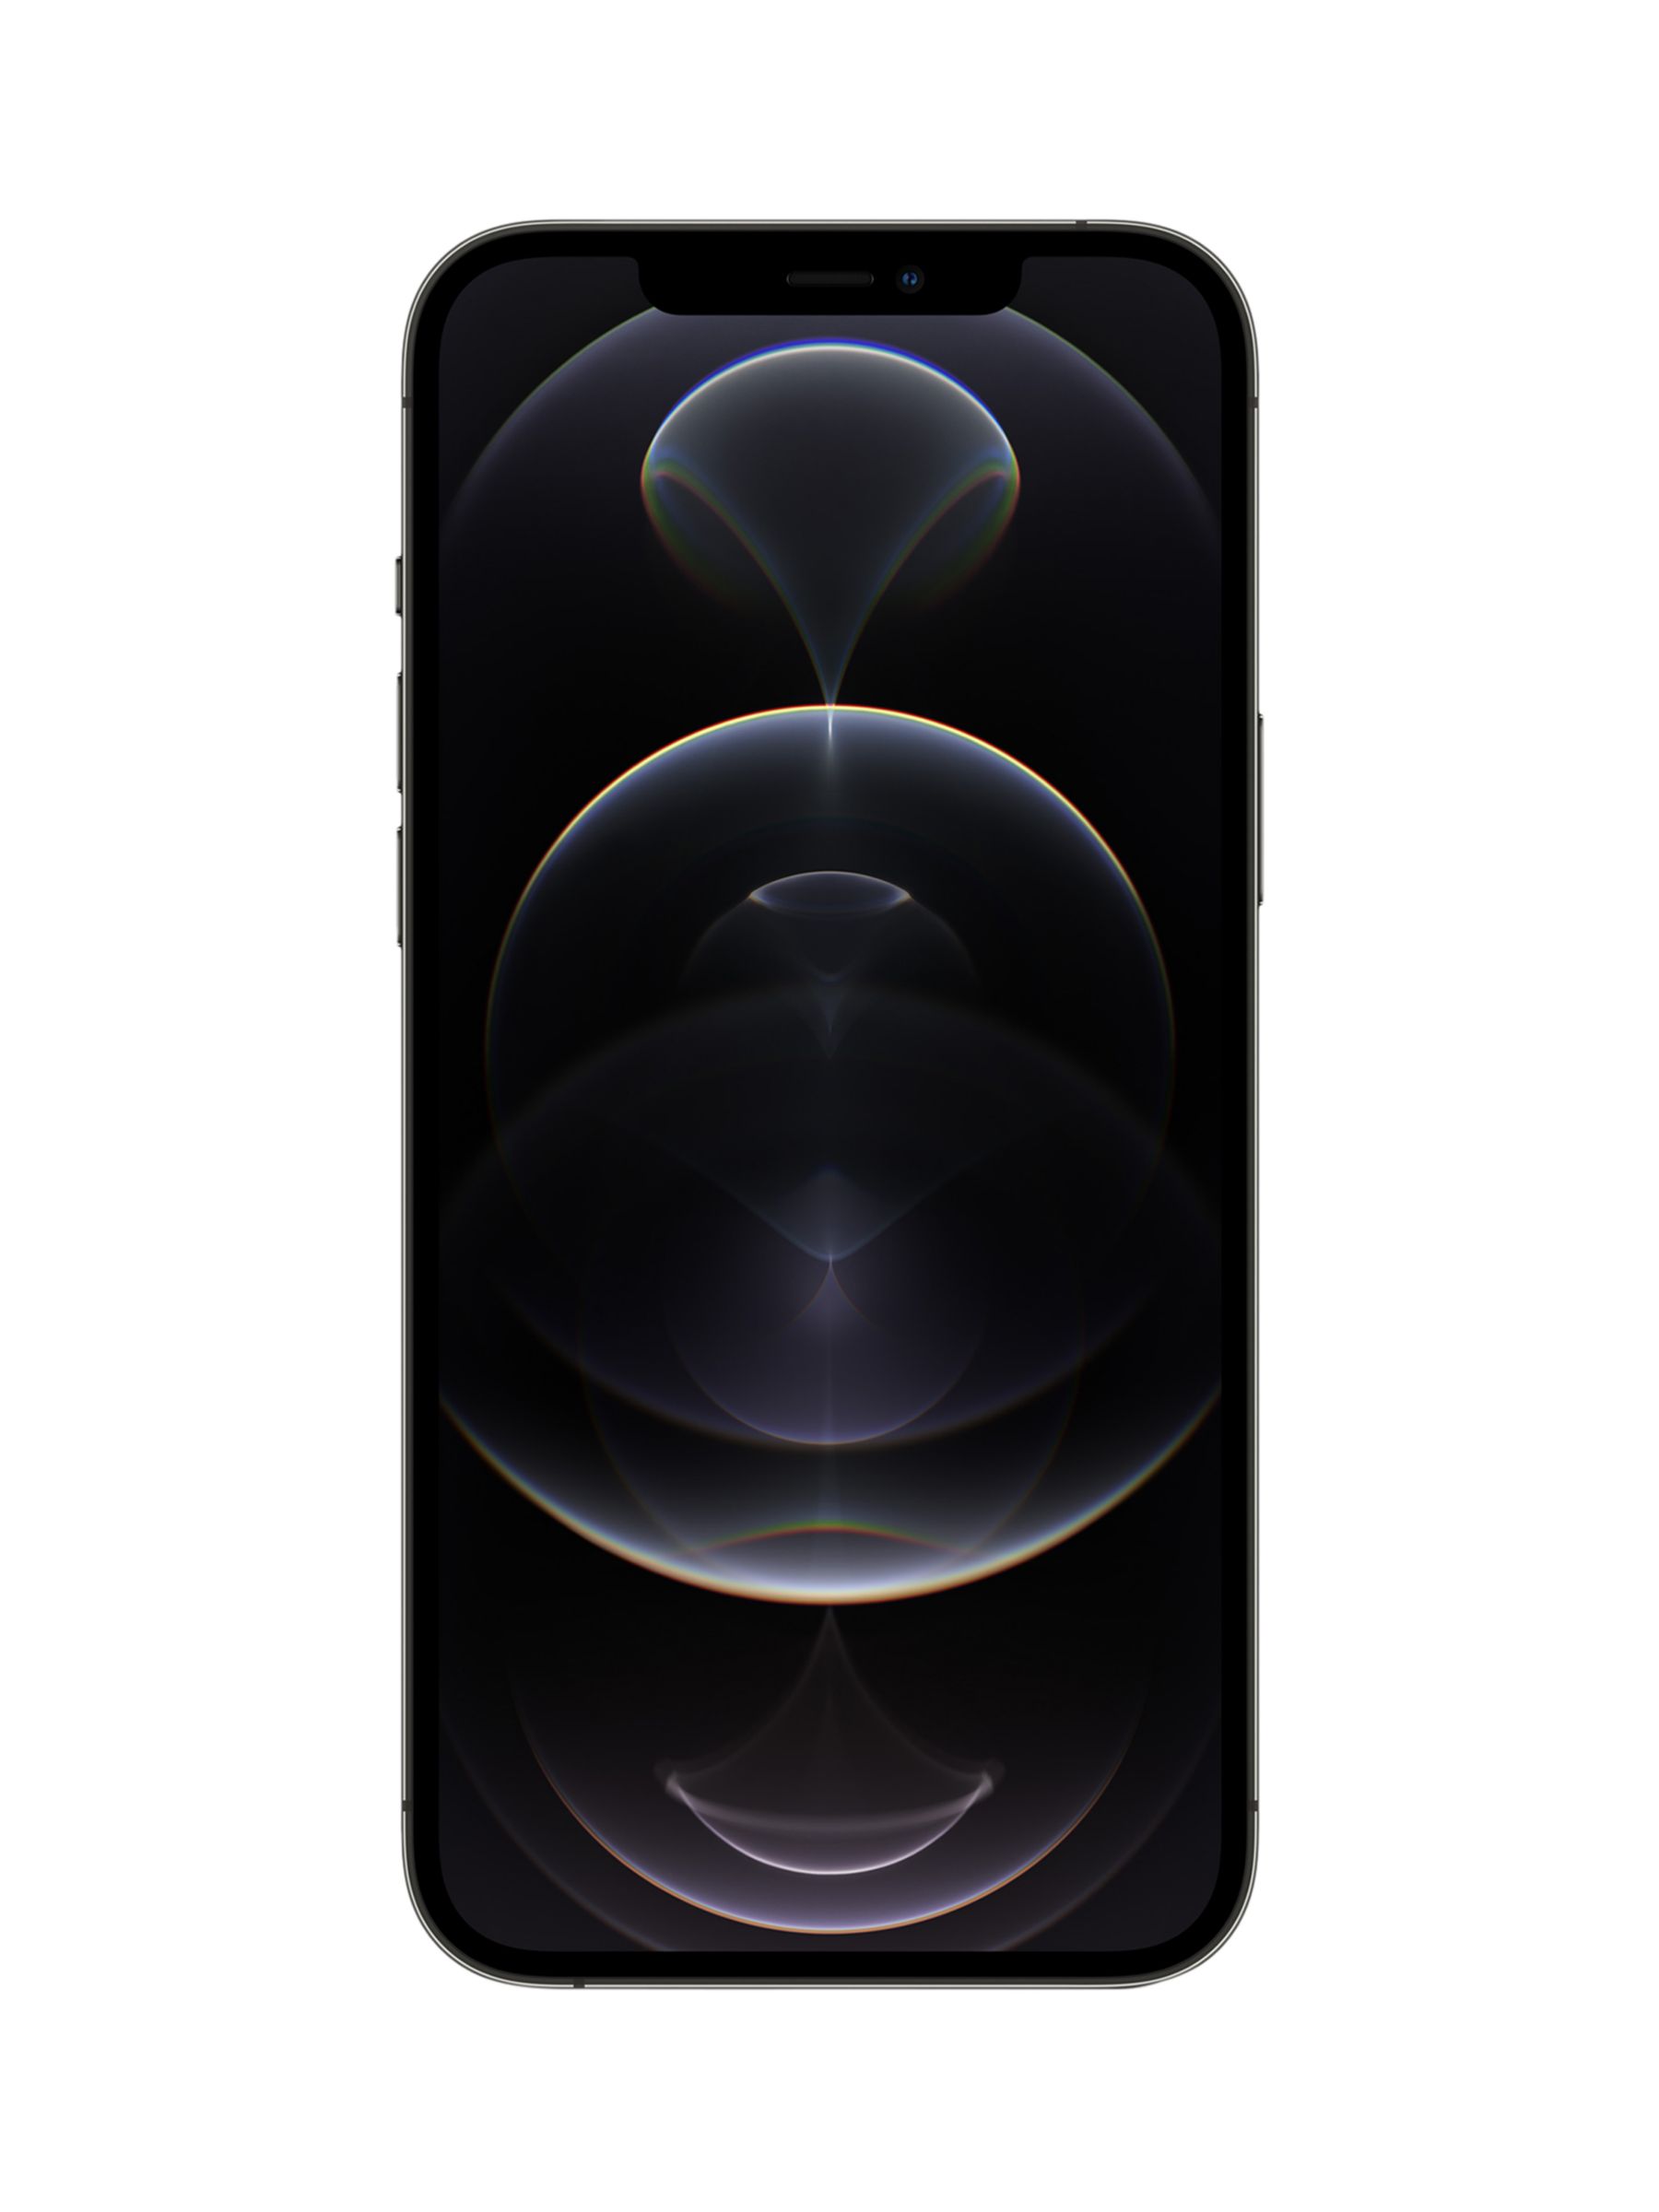 Apple Iphone 12 Pro Max Ios 6 7 5g Sim Free 256gb